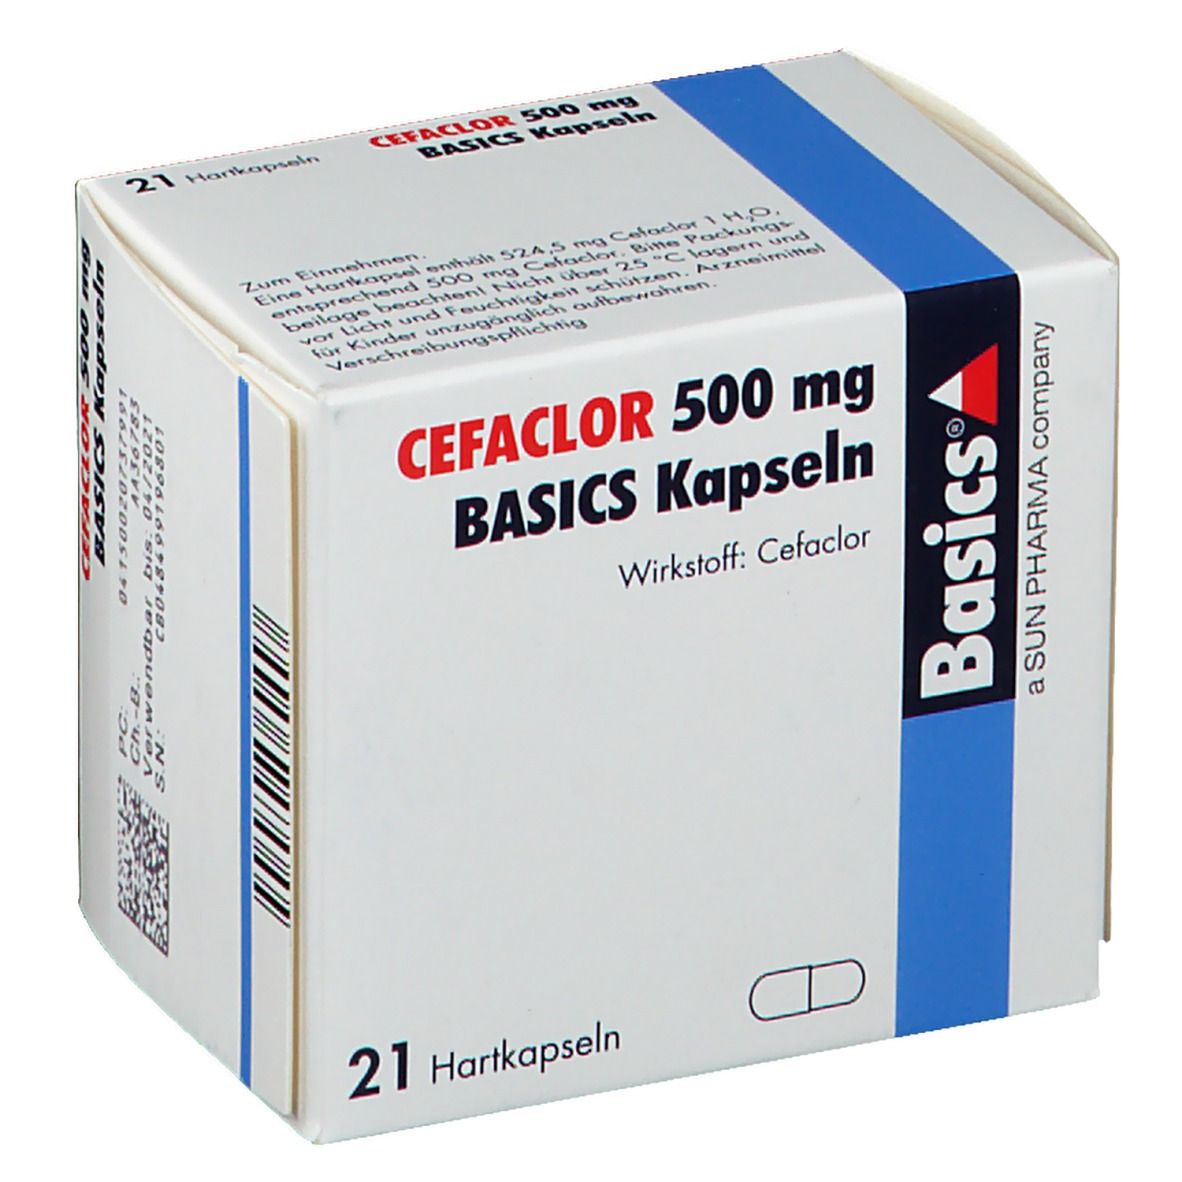 CEFACLOR 500 mg BASICS